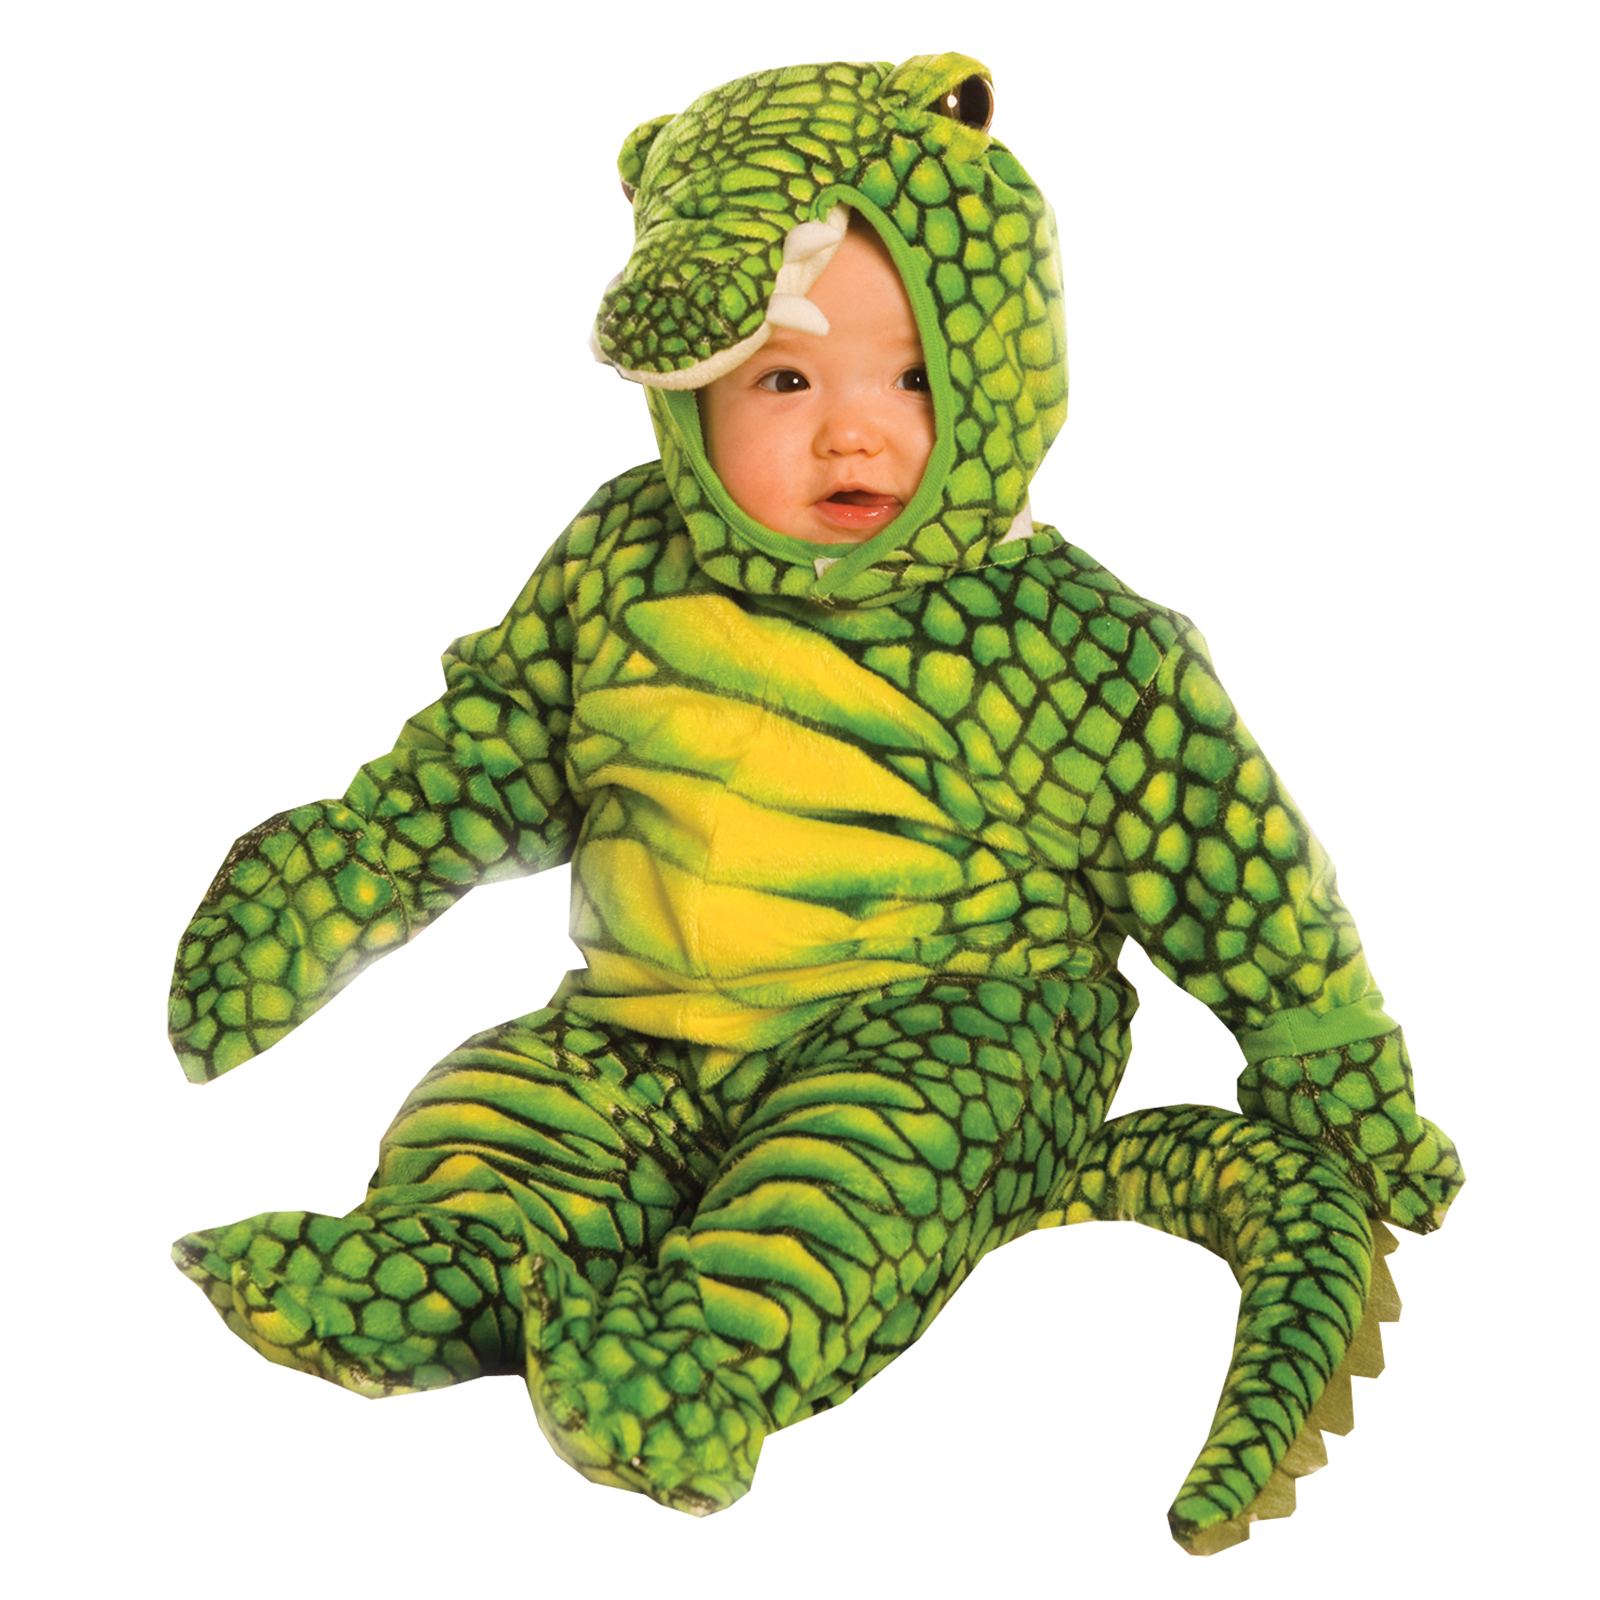 Toddler Alligator Costume Size: 2T-4T